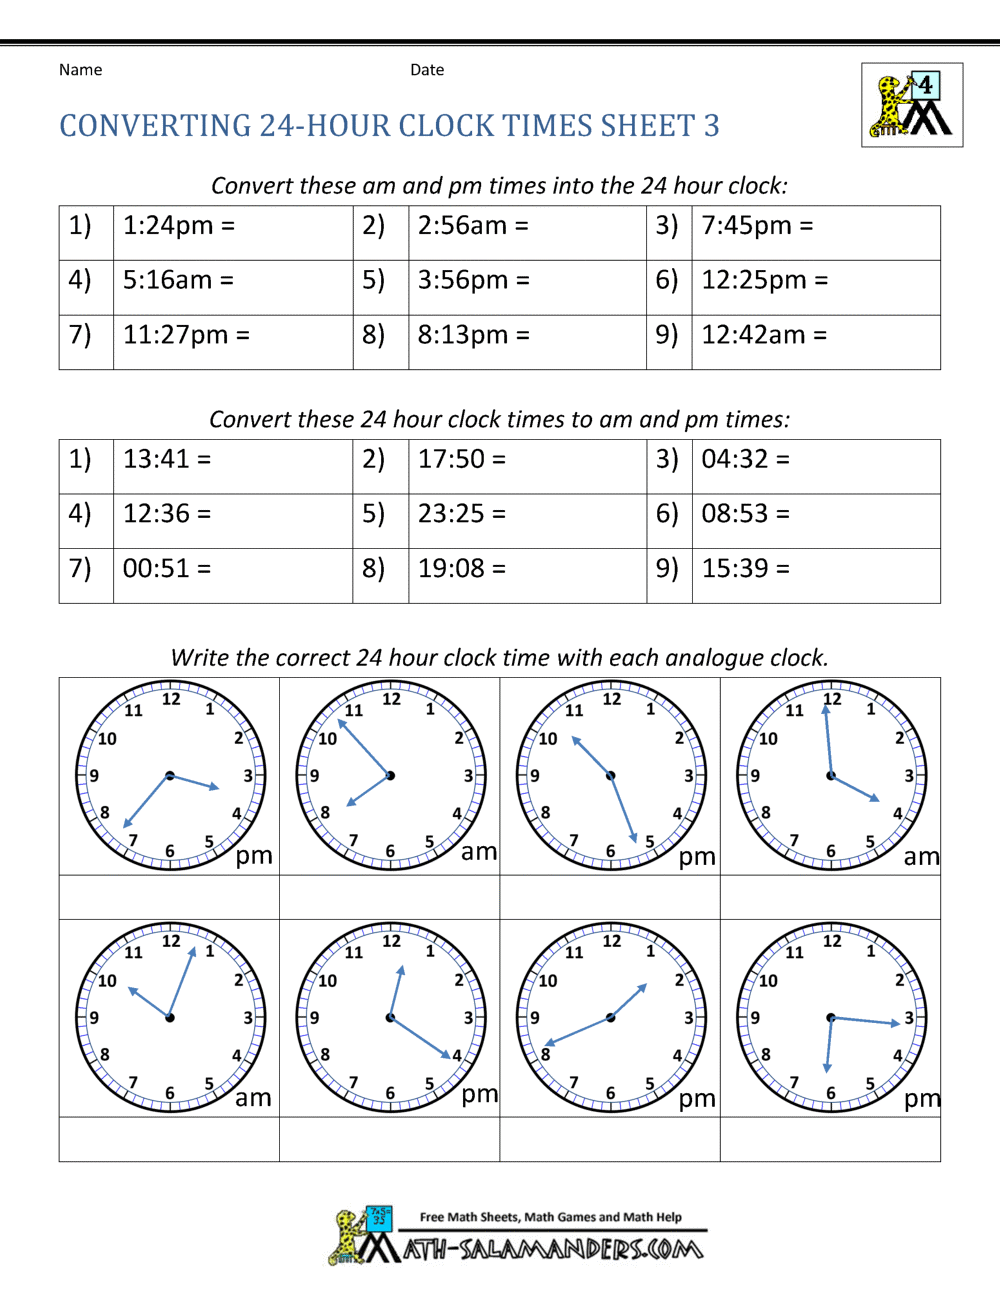 24 Hour Clock Face Template from www.math-salamanders.com